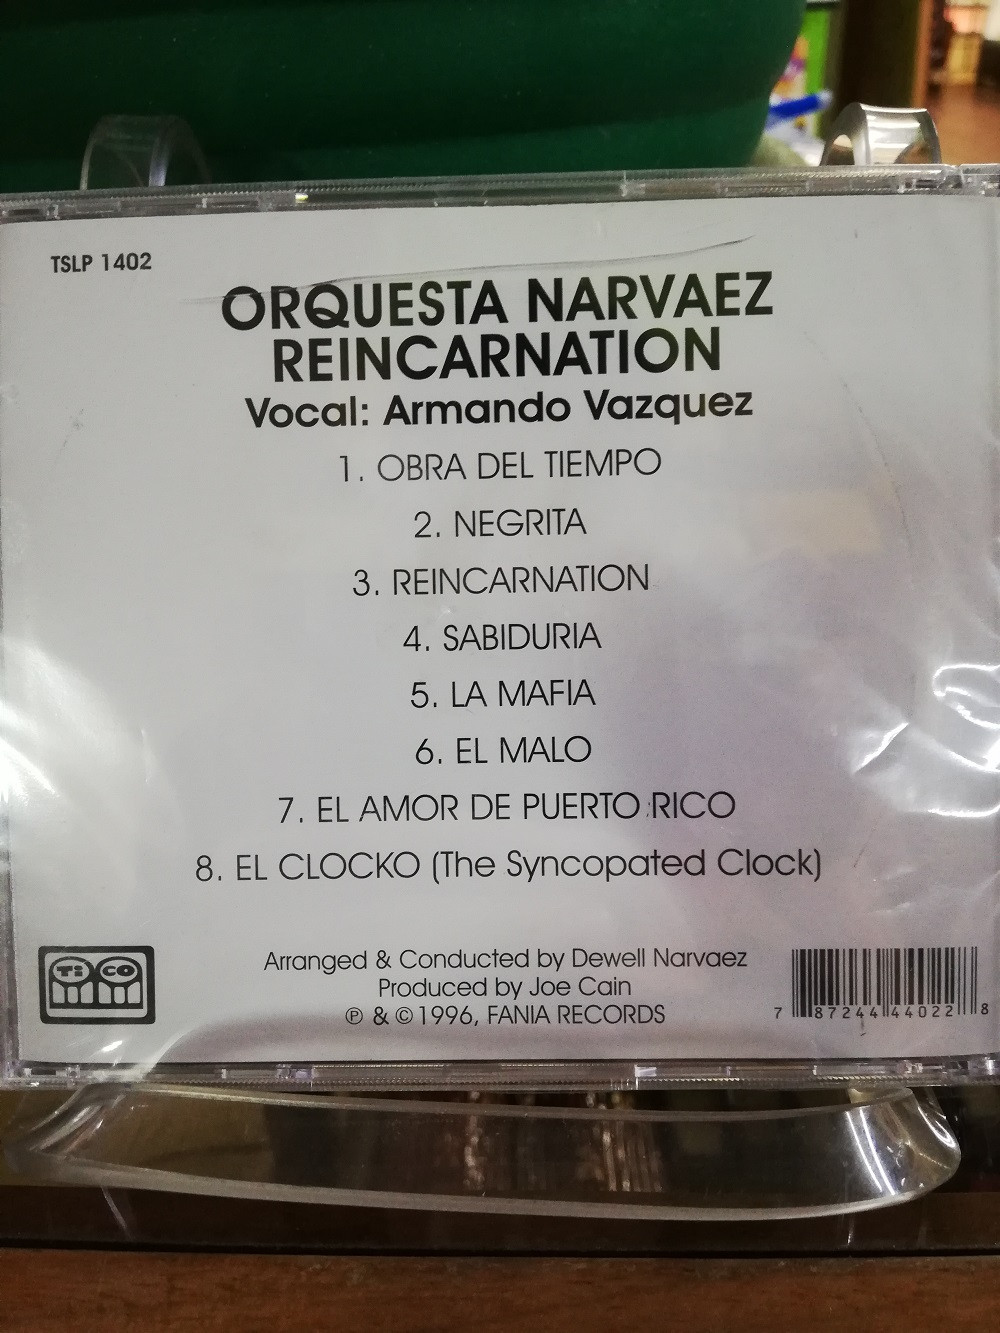 Imagen CD ORQUESTA NARVAEZ - REINCARNATION 2